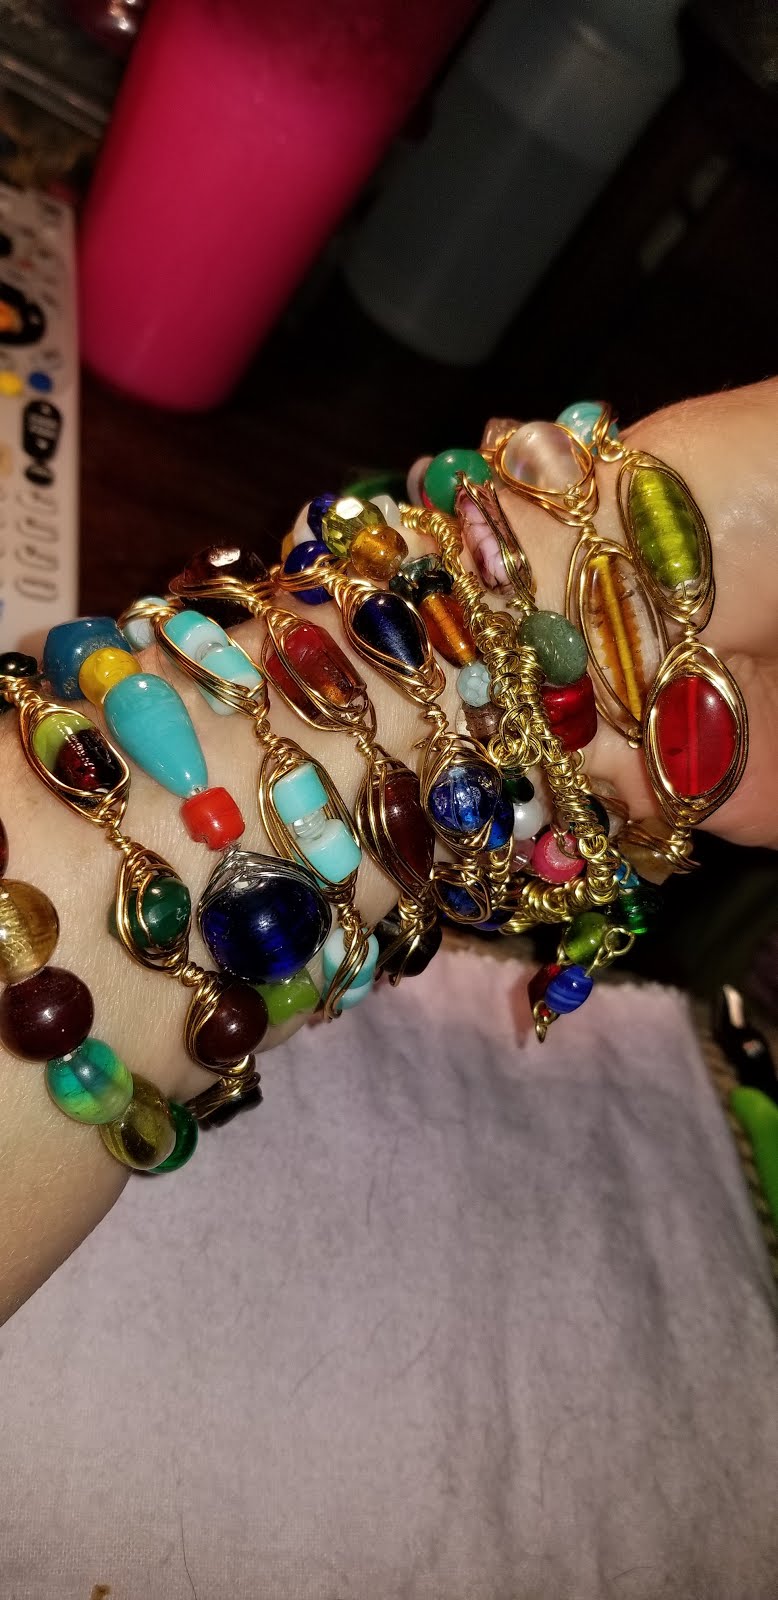 Bracelets I made